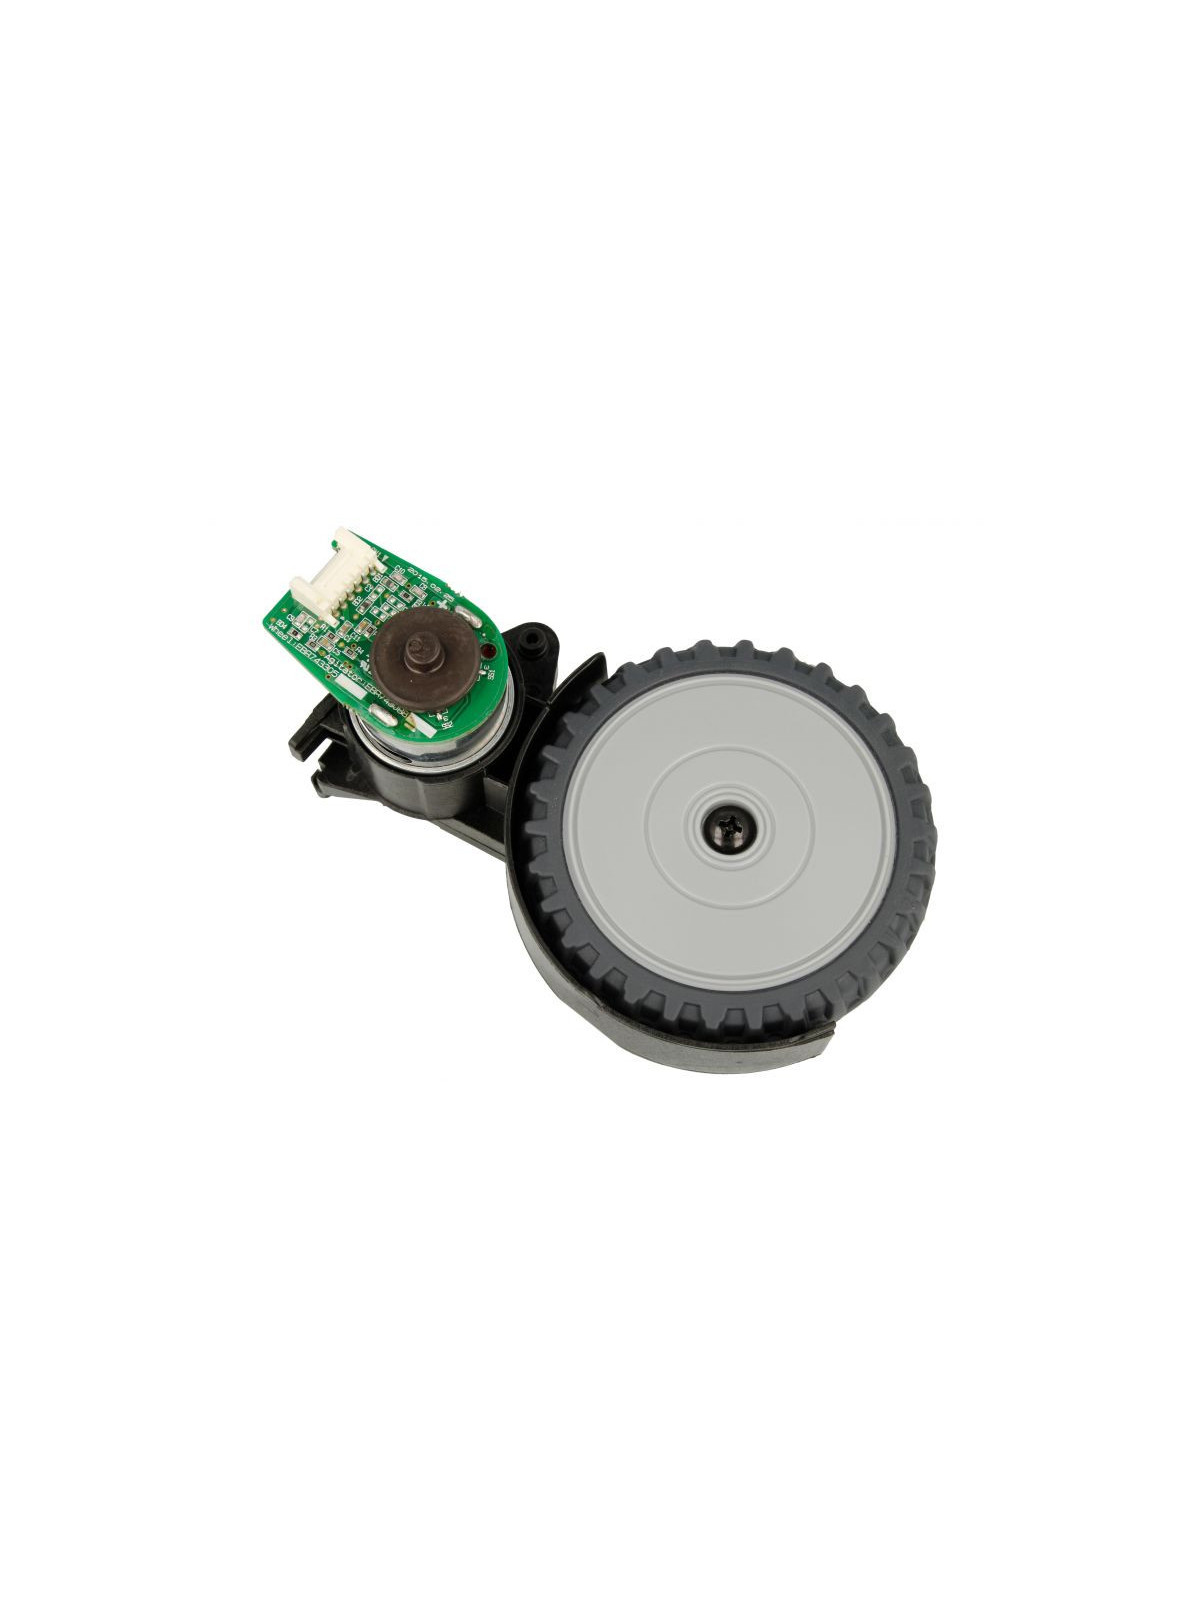 Ensemble roue gauche LG Hom-Bot 3.0 - Aspirateur robot